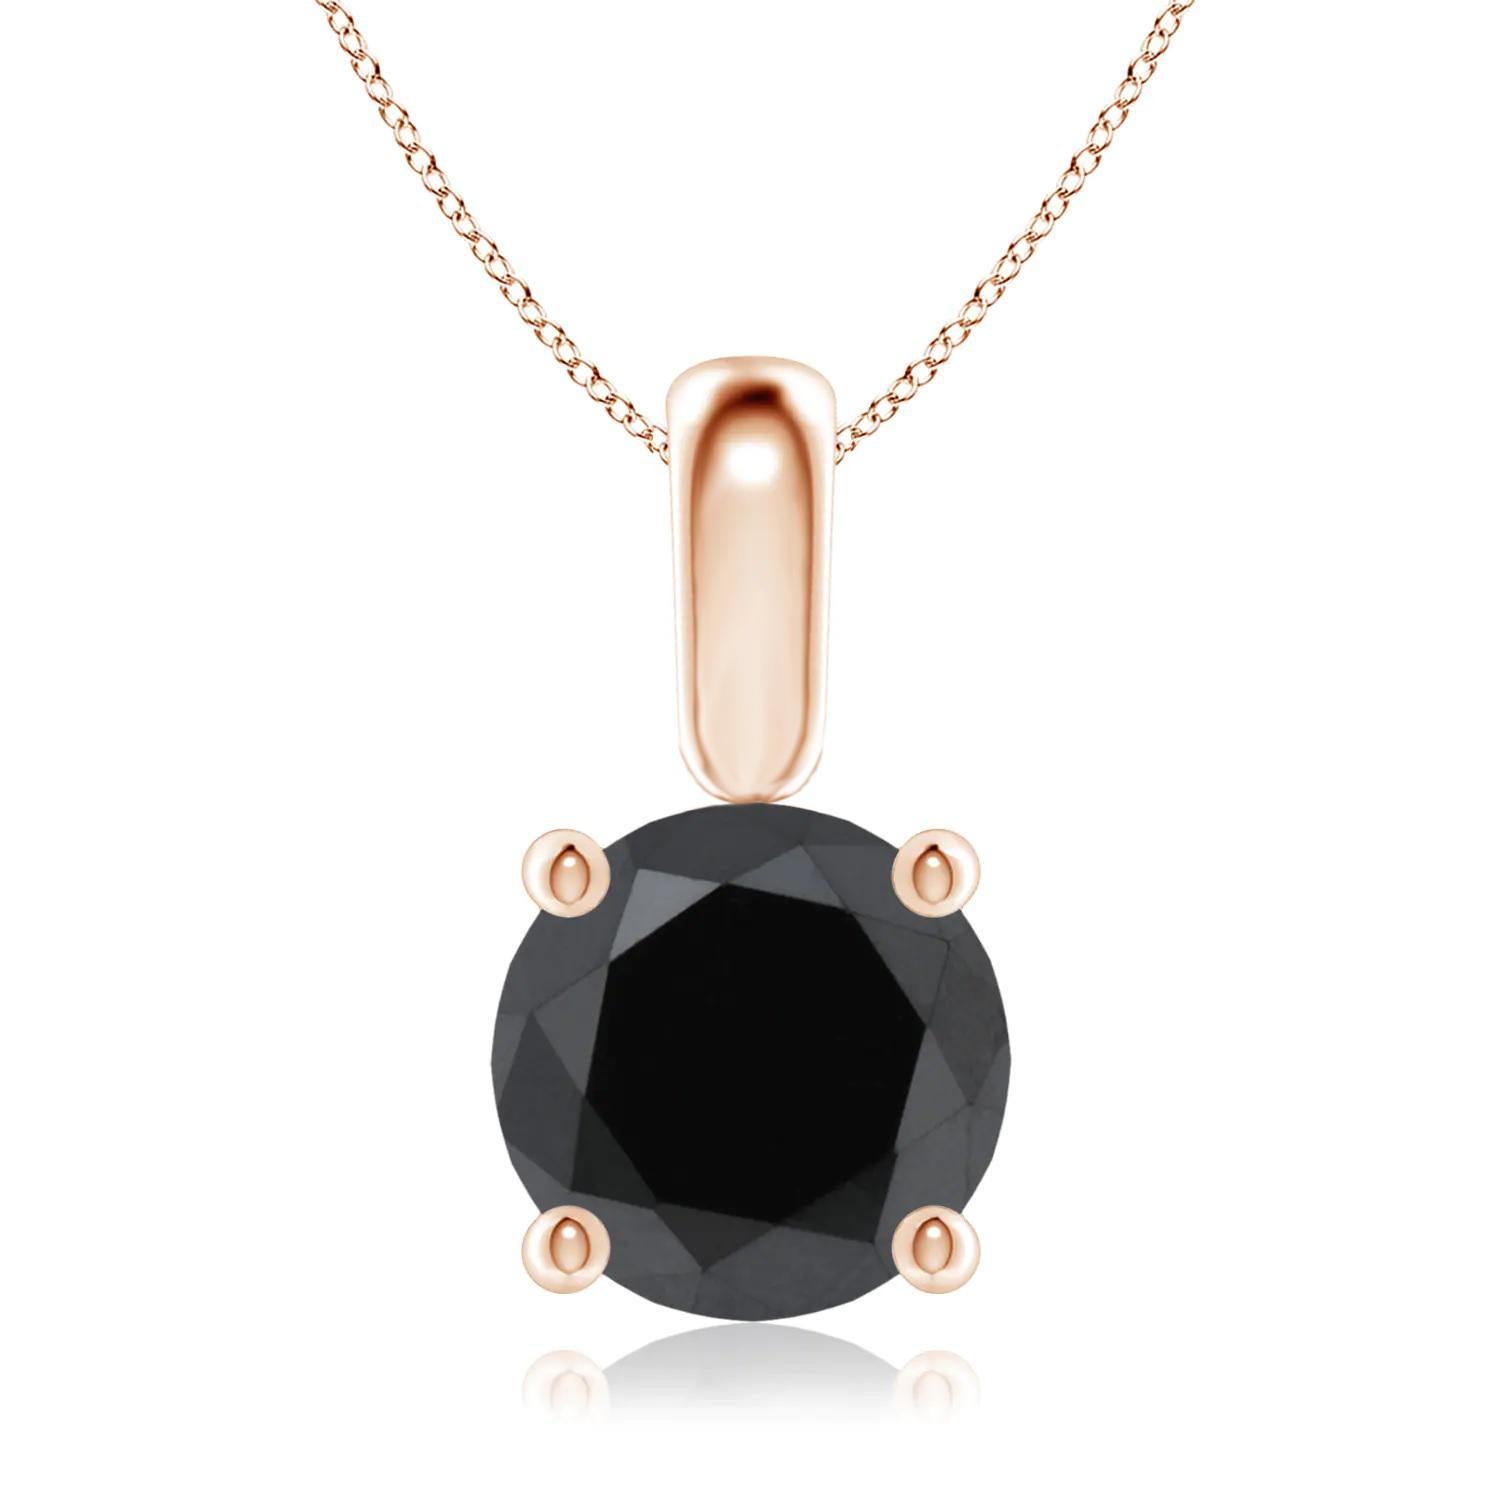 Contemporary 1.64 Carat Round Black Diamond Solitaire Pendant Necklace in 14K Rose Gold